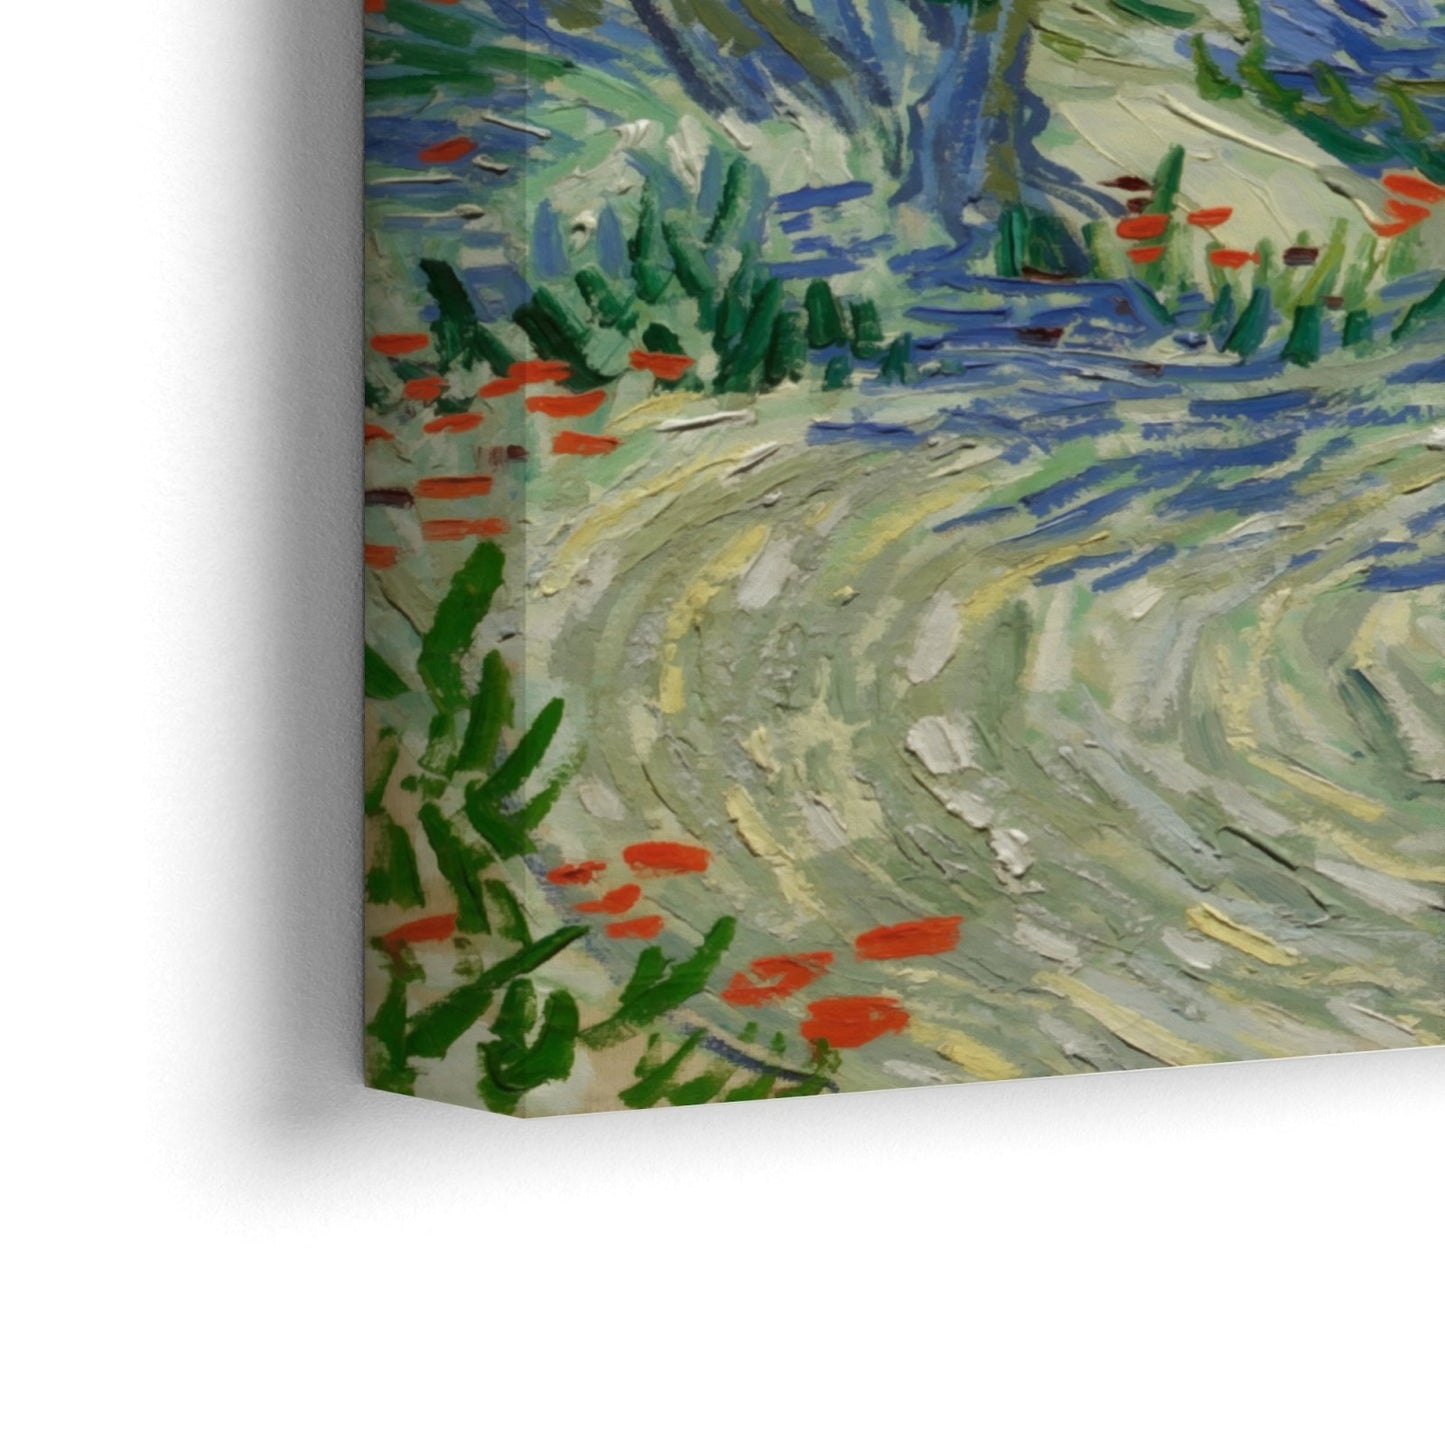 Sad Oliwny 1889, Vincent Van Gogh